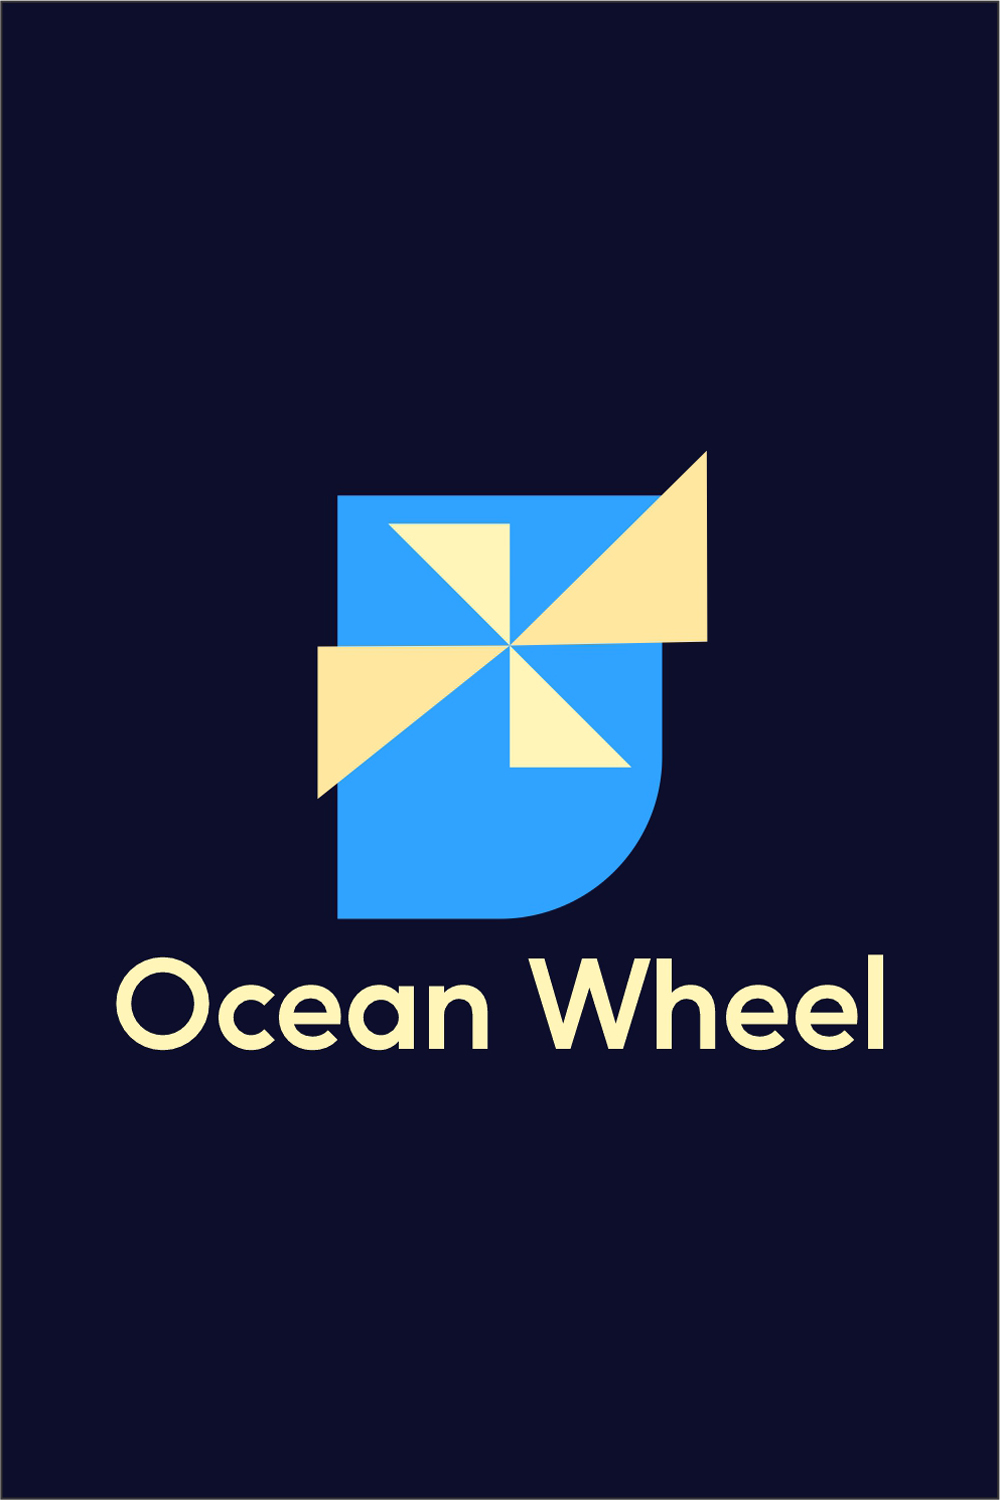 Ocean Wheel pinterest preview image.